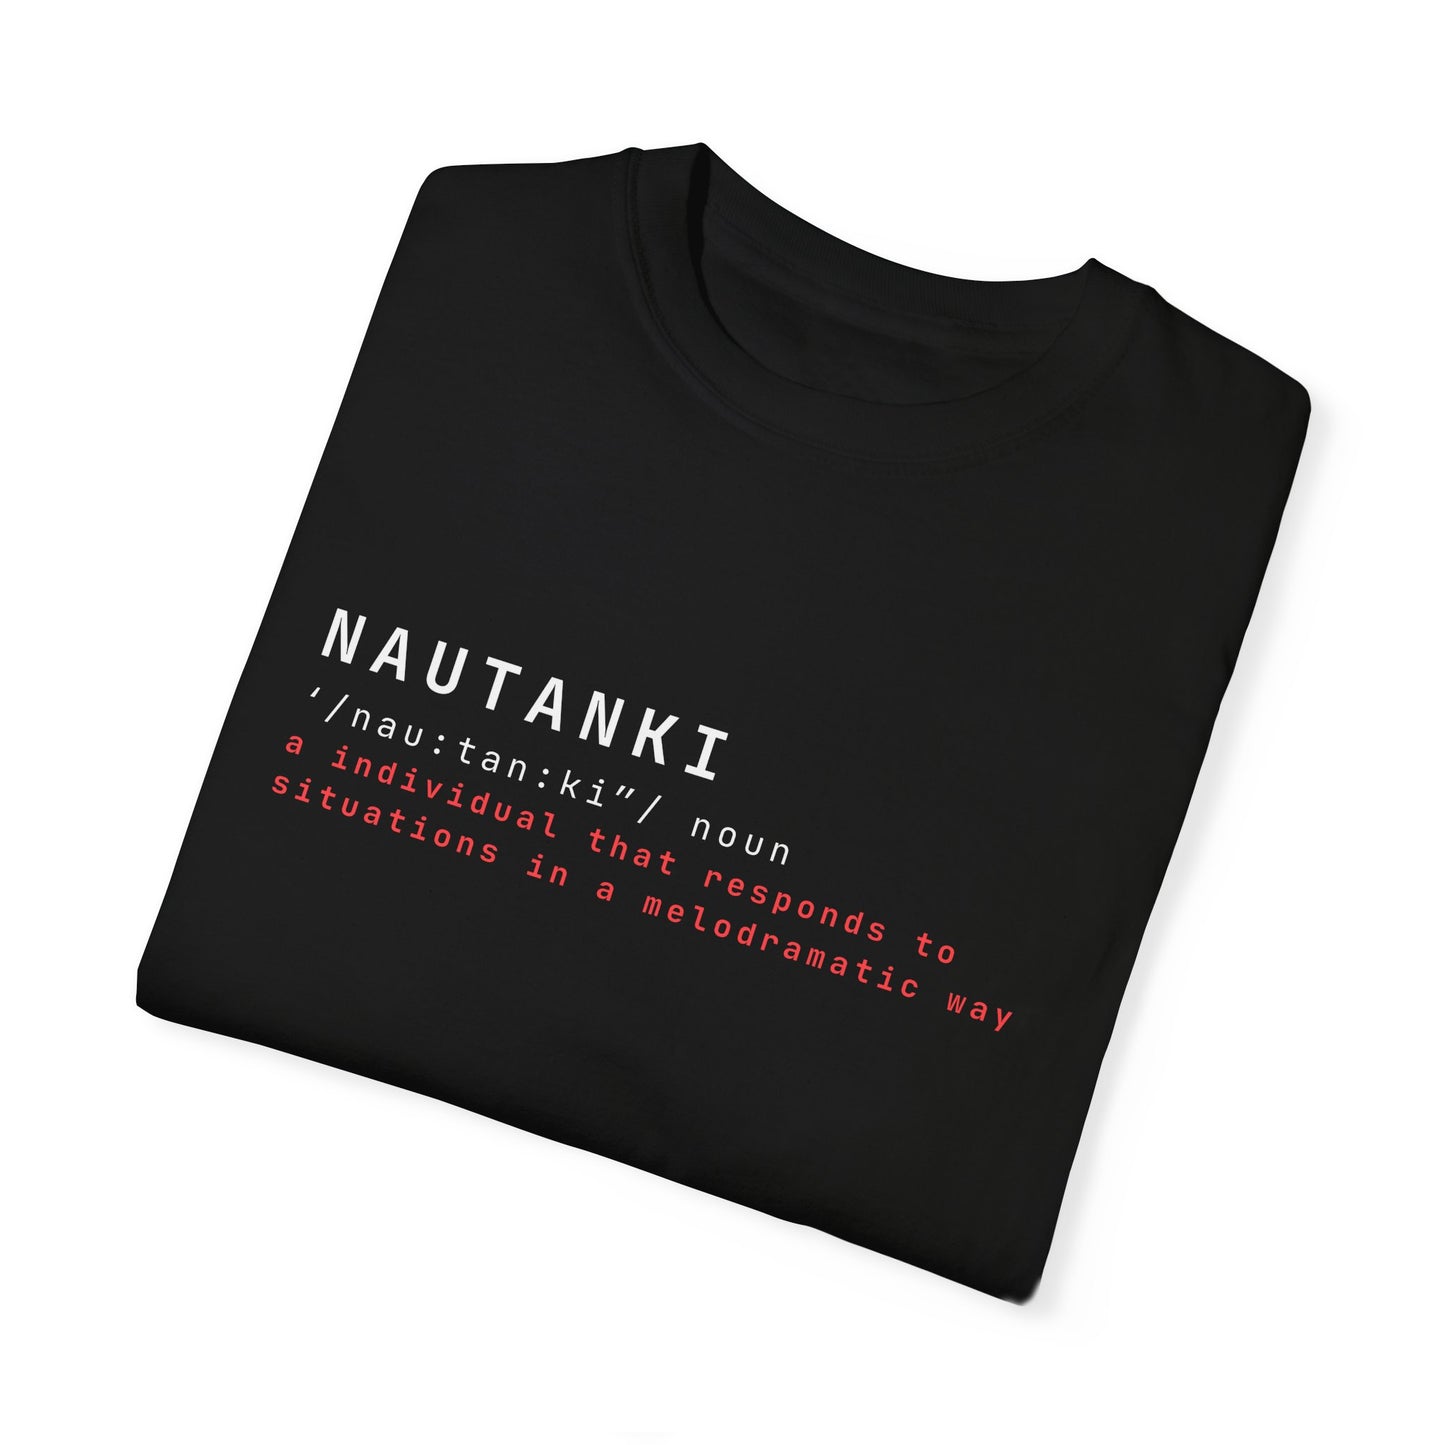 Nautanki (Drama Queen) T-shirt